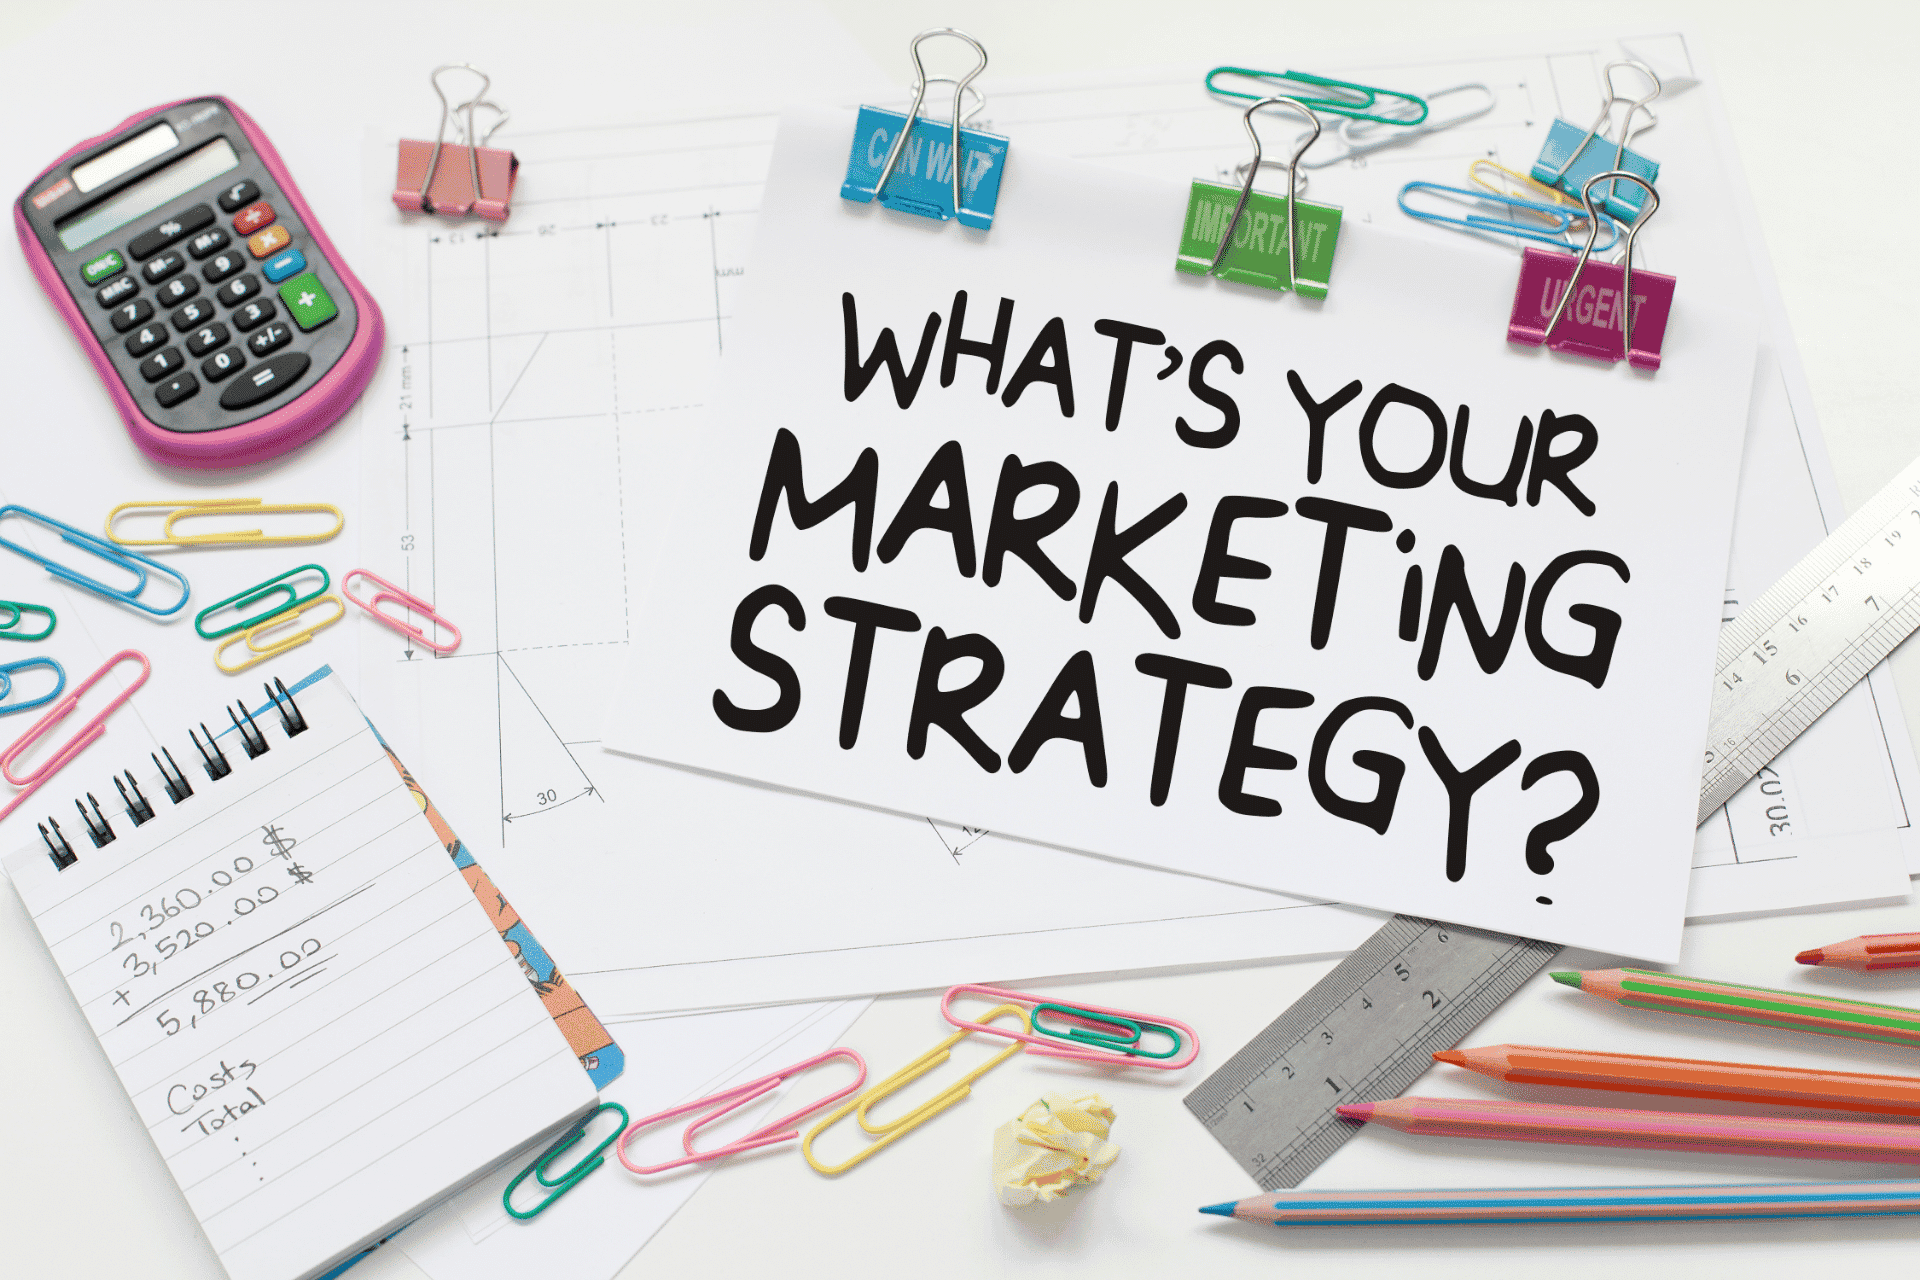 Scritta "What's your marketing strategy=" su foglio bianco